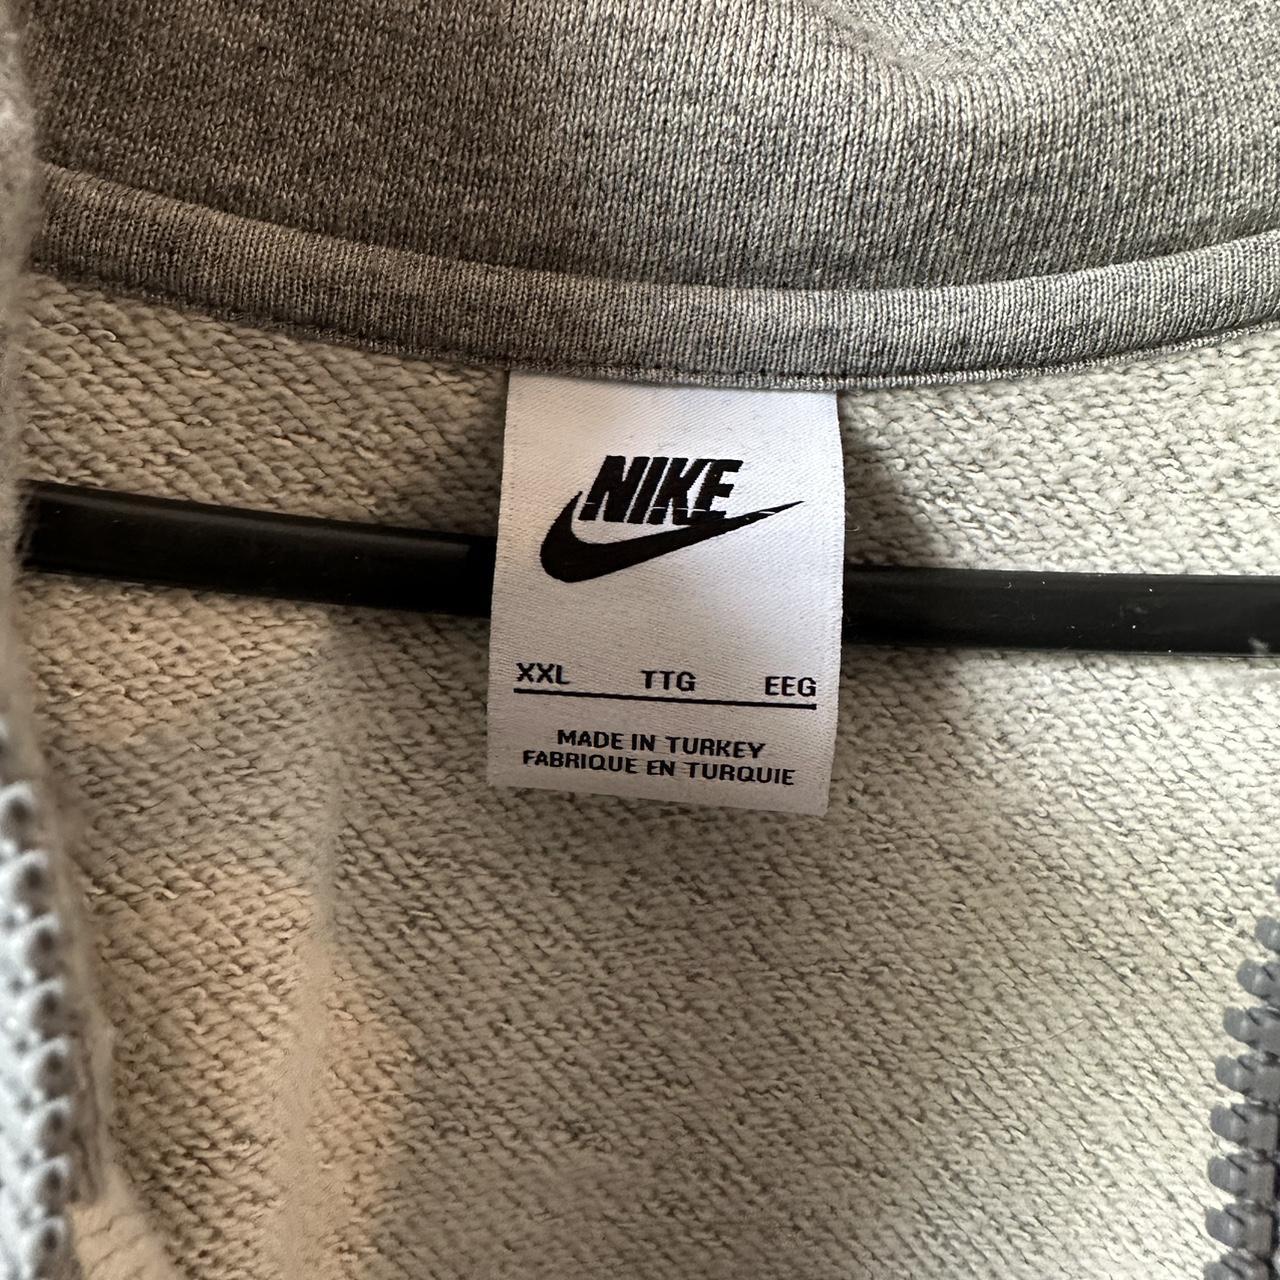 1/2 Zip Nike Pullover Sweater in Grey - Depop